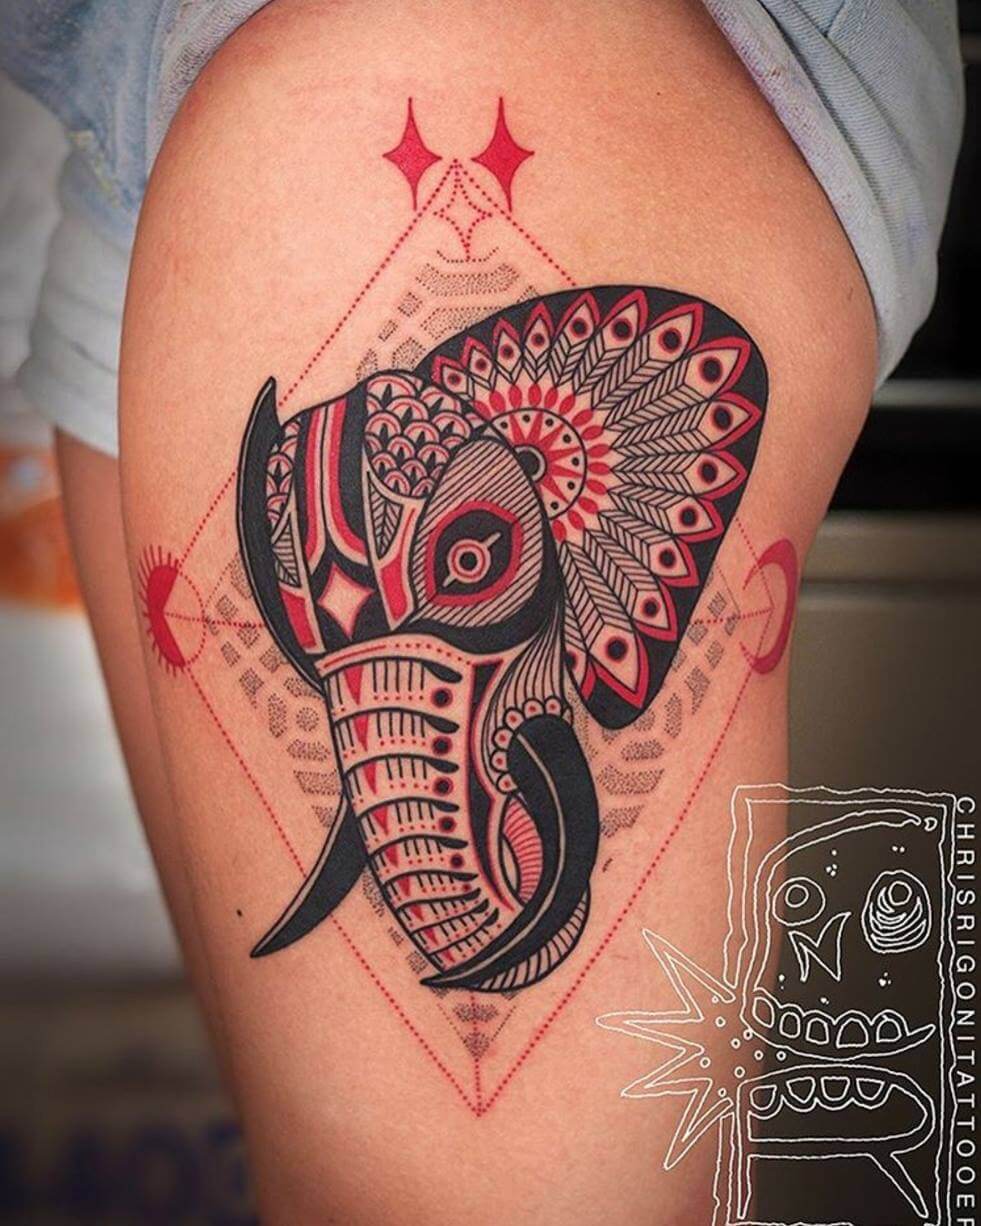 chris rigoni amazing tattoos 11 (1)